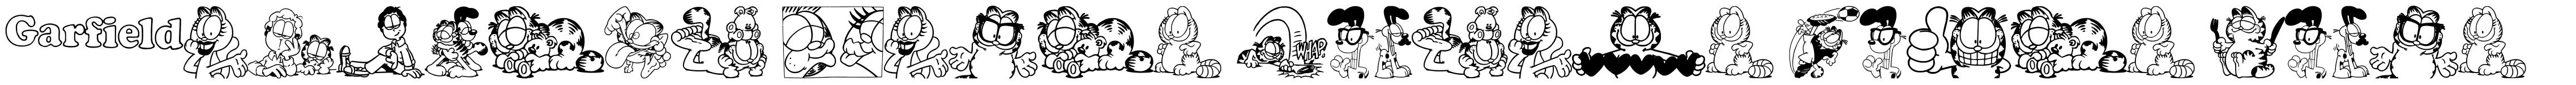 Garfield Hates Mondays Loves Fonts fonte